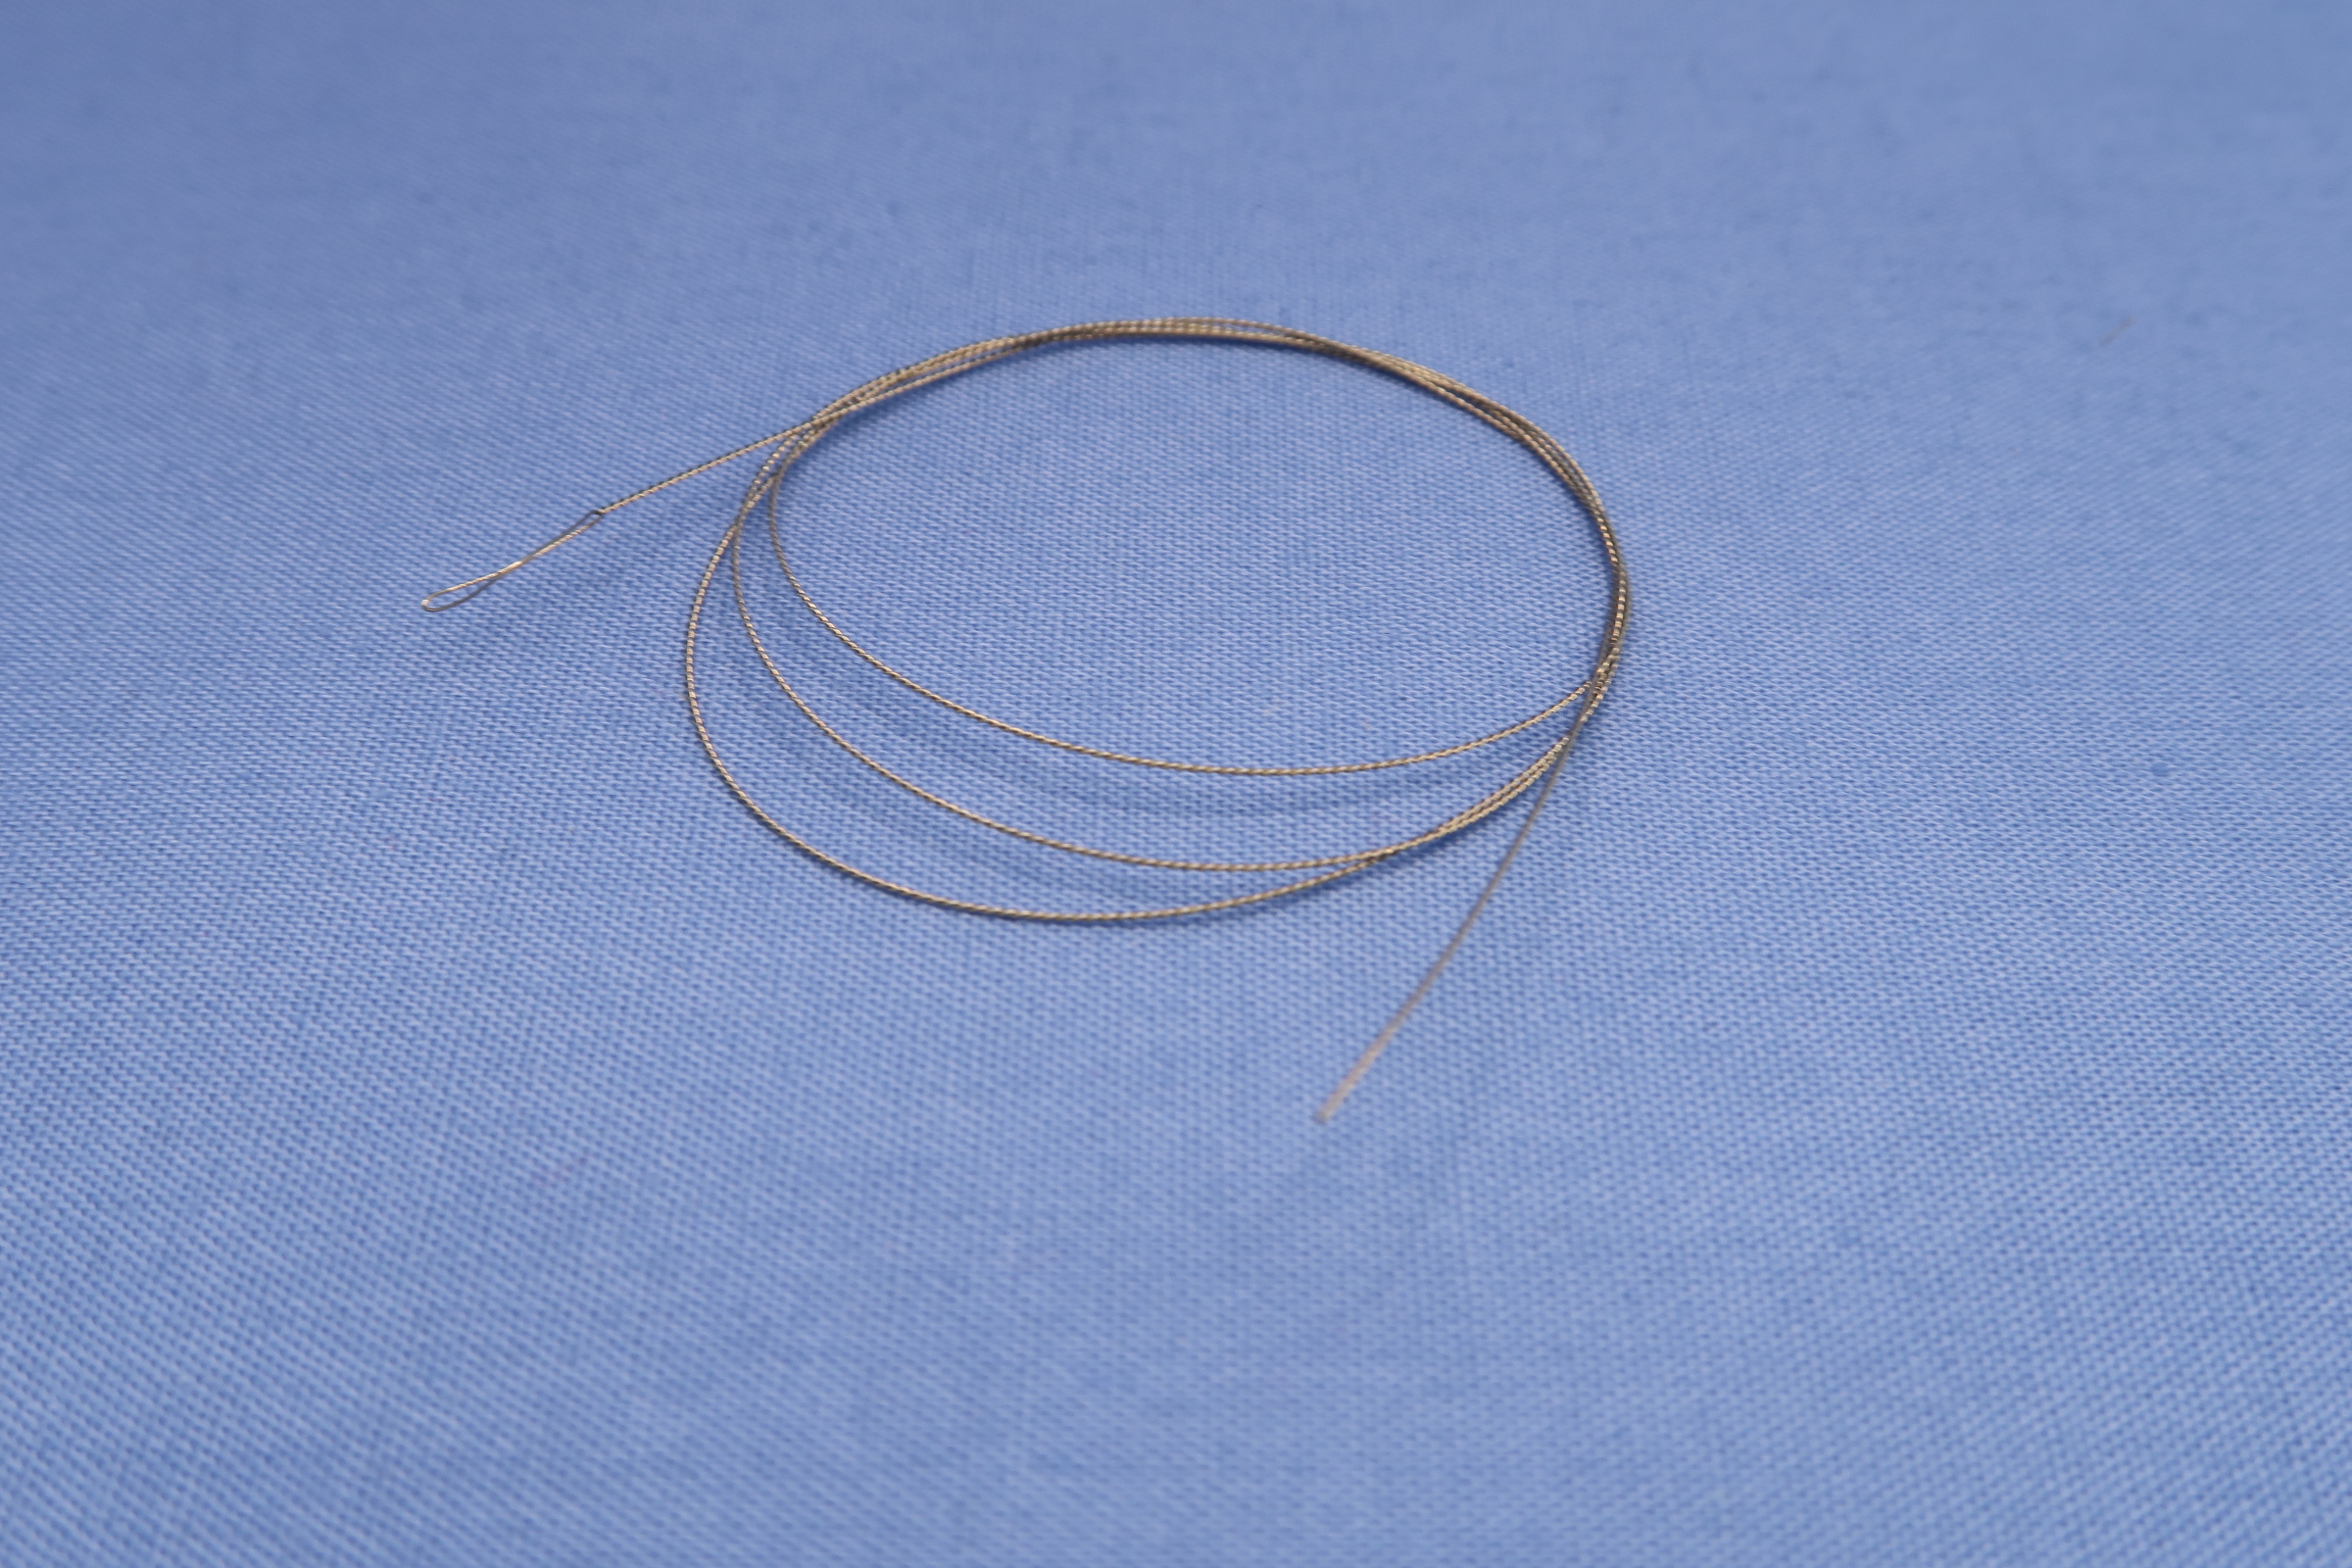 Wire Looper Threader (longer length)